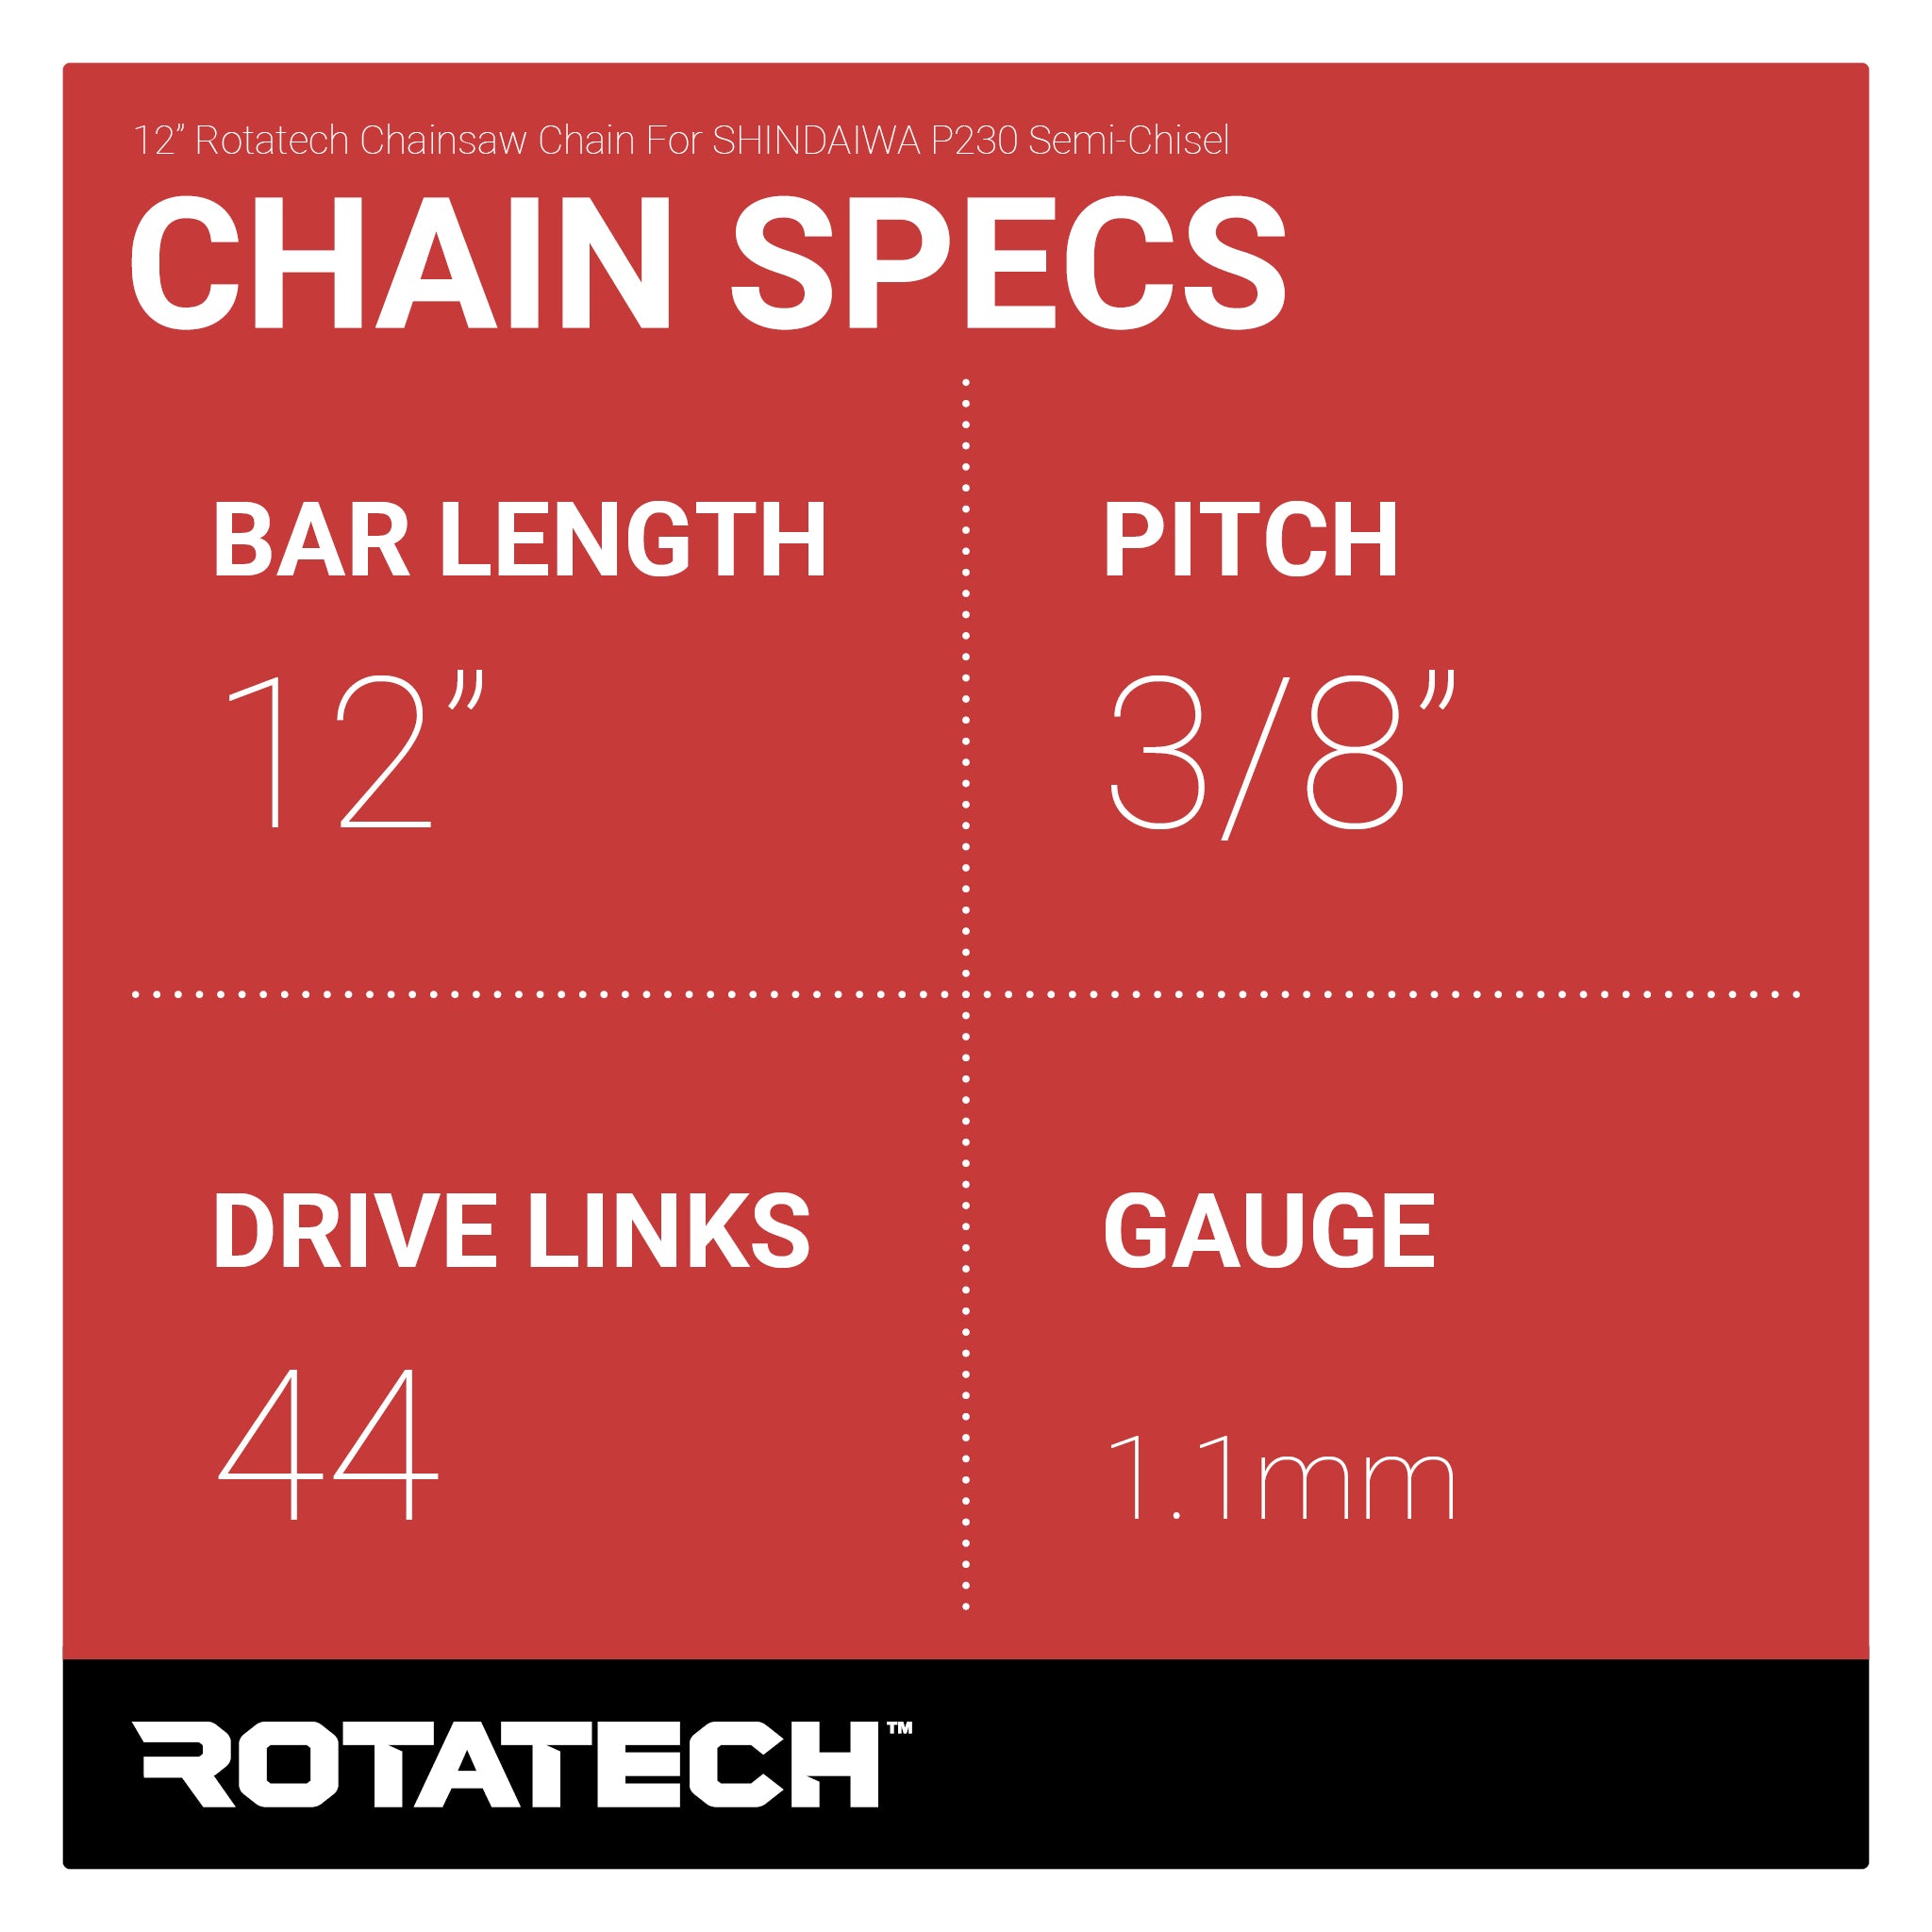 12" Rotatech Chainsaw Chain For SHINDAIWA P230 Semi-Chisel Chain Specs